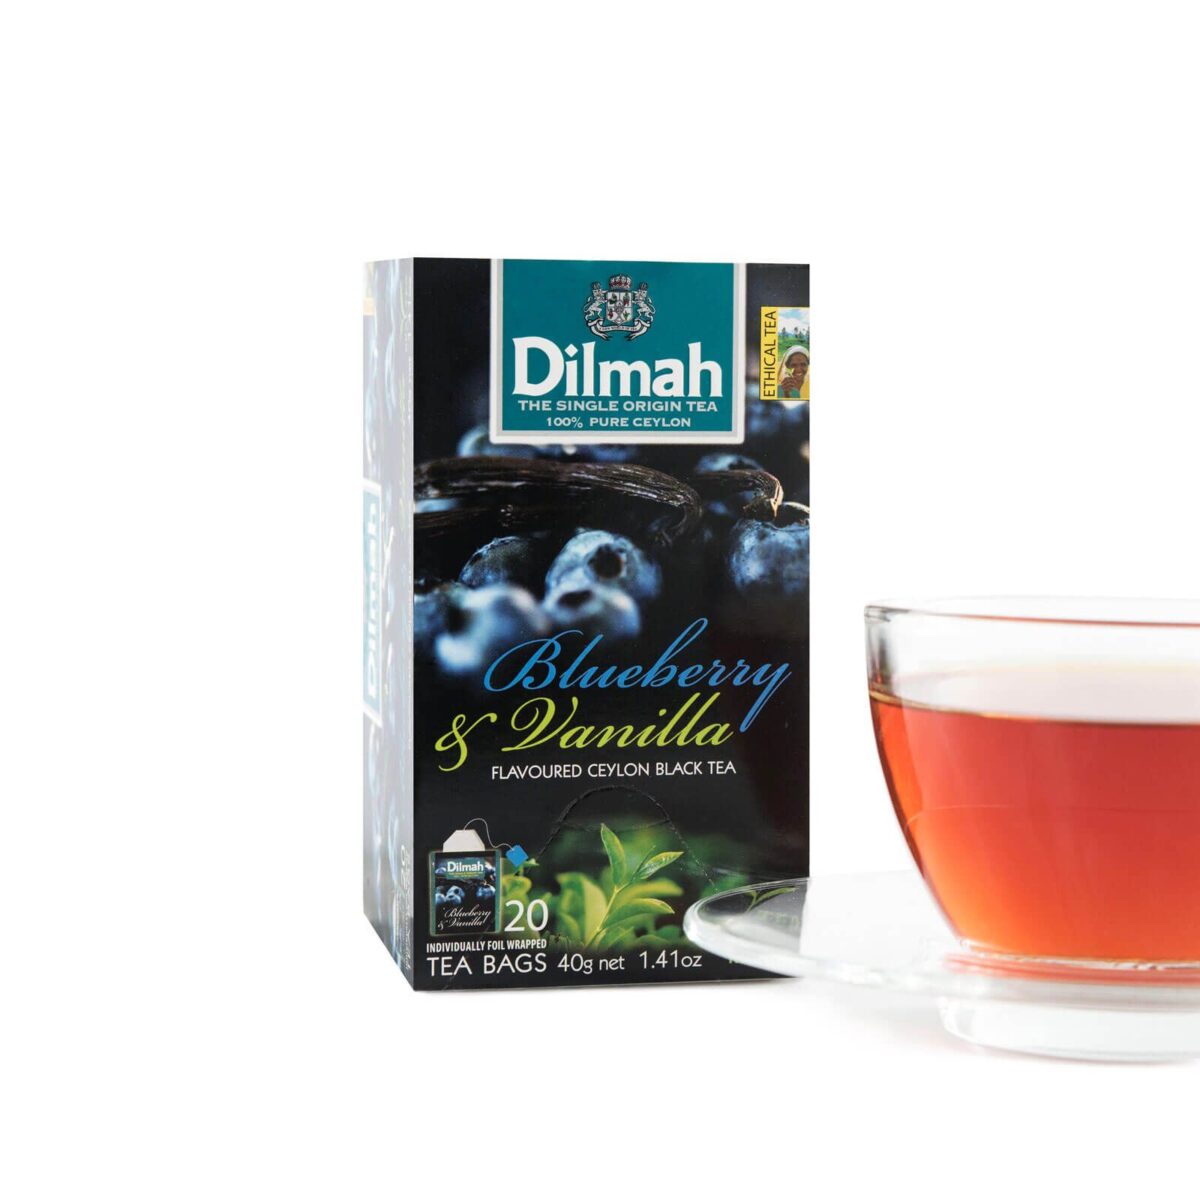 Dilmah Blueberry-and-Vanilla flavored ceylon black tea